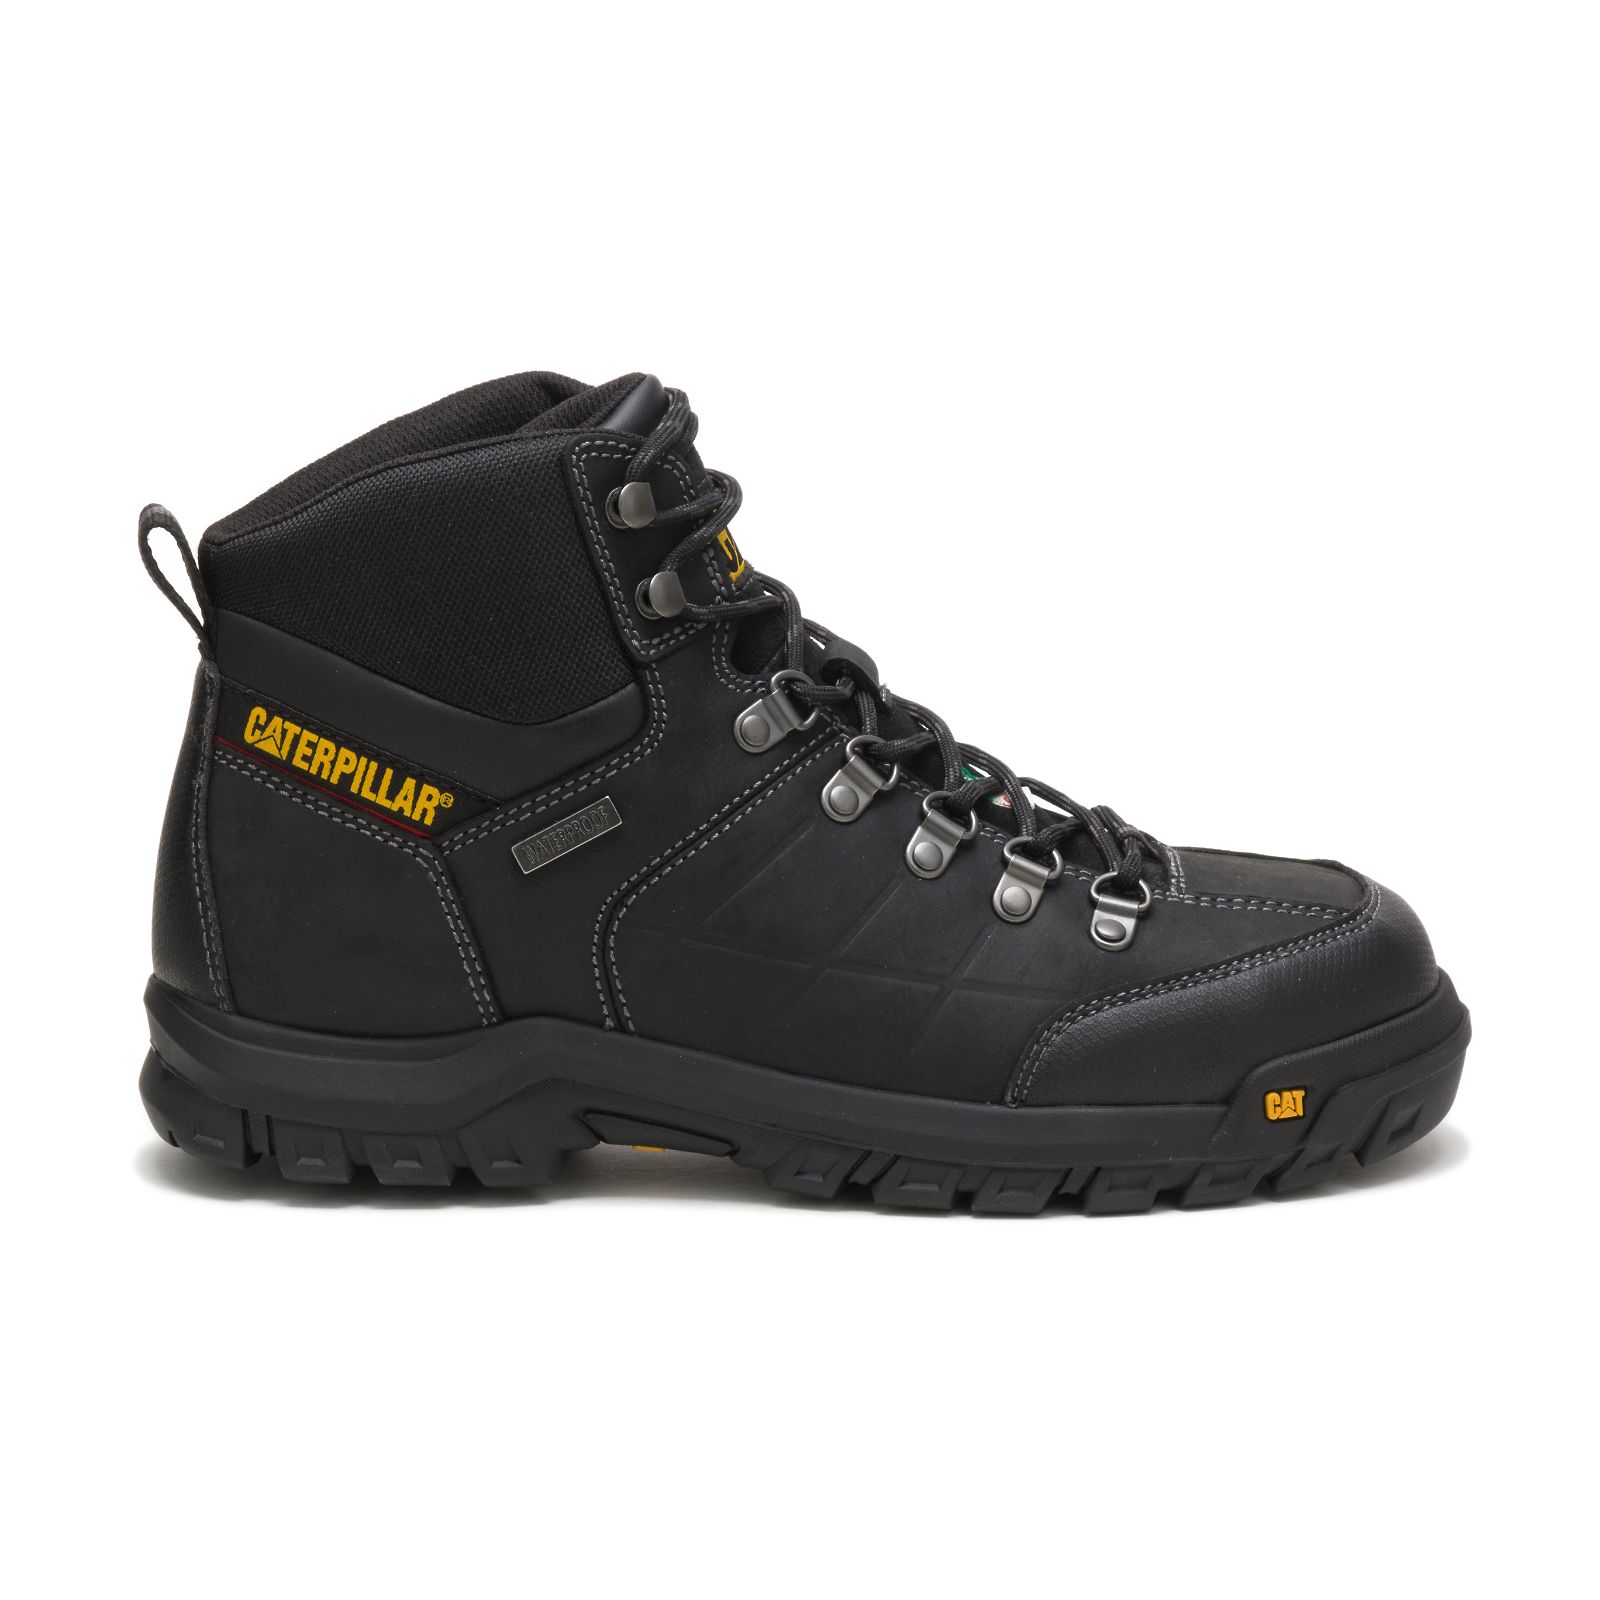 Black Caterpillar Threshold Waterproof Steel Toe Csa Men's Work Boots | Cat-854103